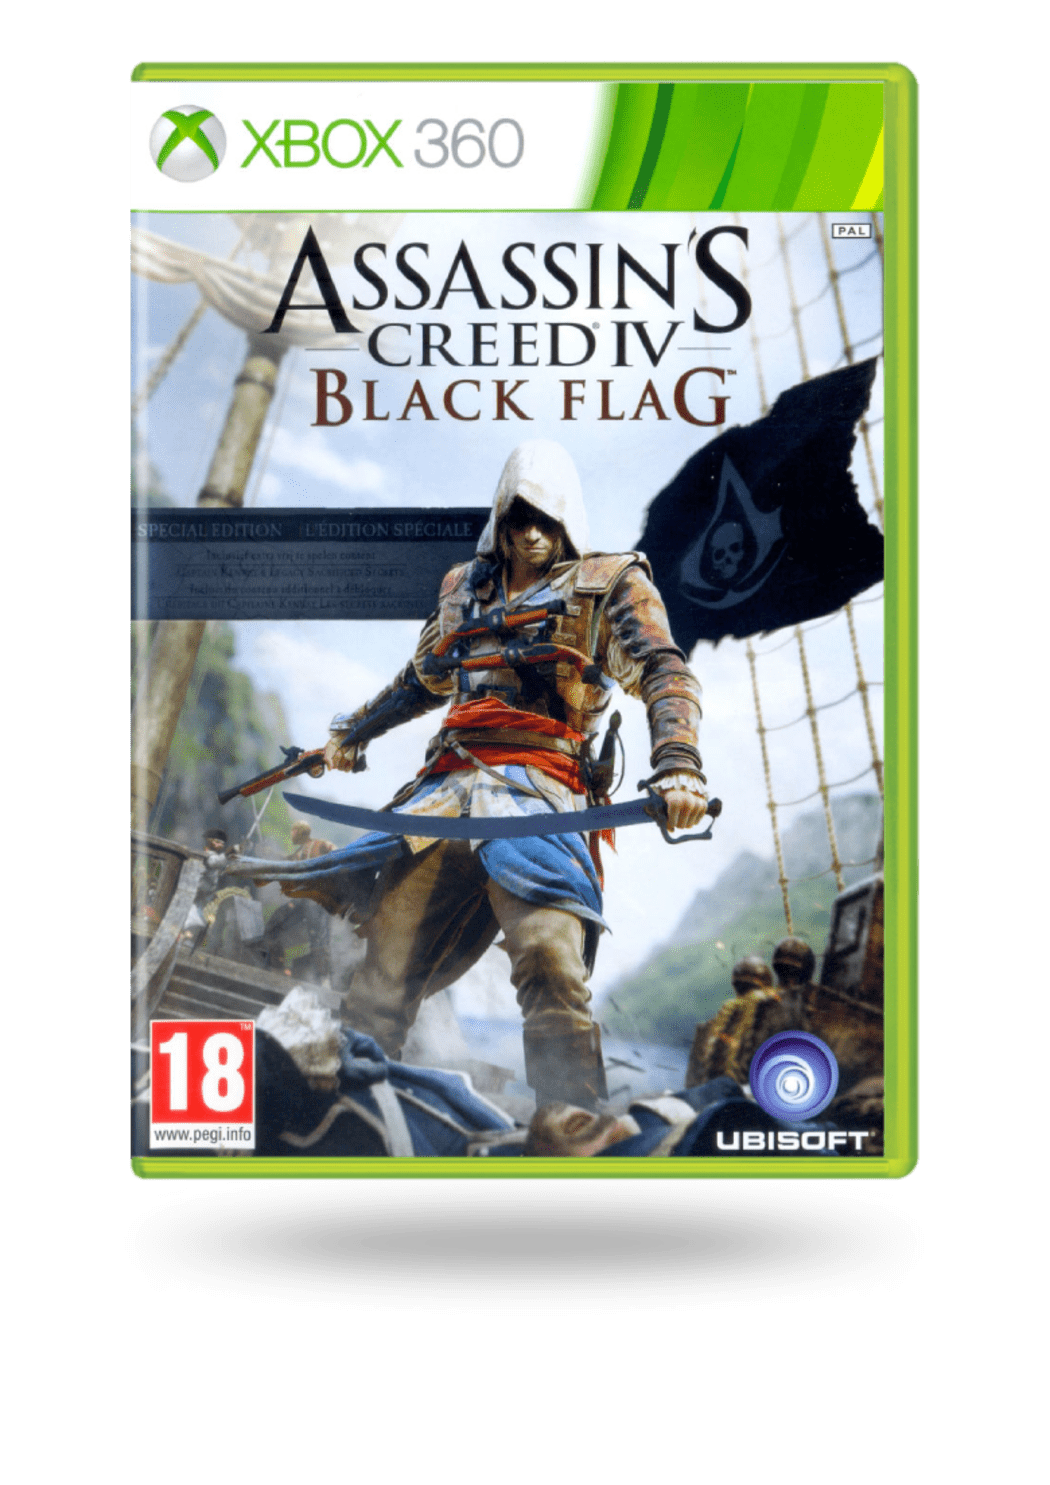 Assassins игра xbox. Ассасин на хбокс 360. Ассасин черный флаг Xbox 360. Ассасин черный флаг Xbox 360 one. Assassin's Creed Black Flag Xbox 360.